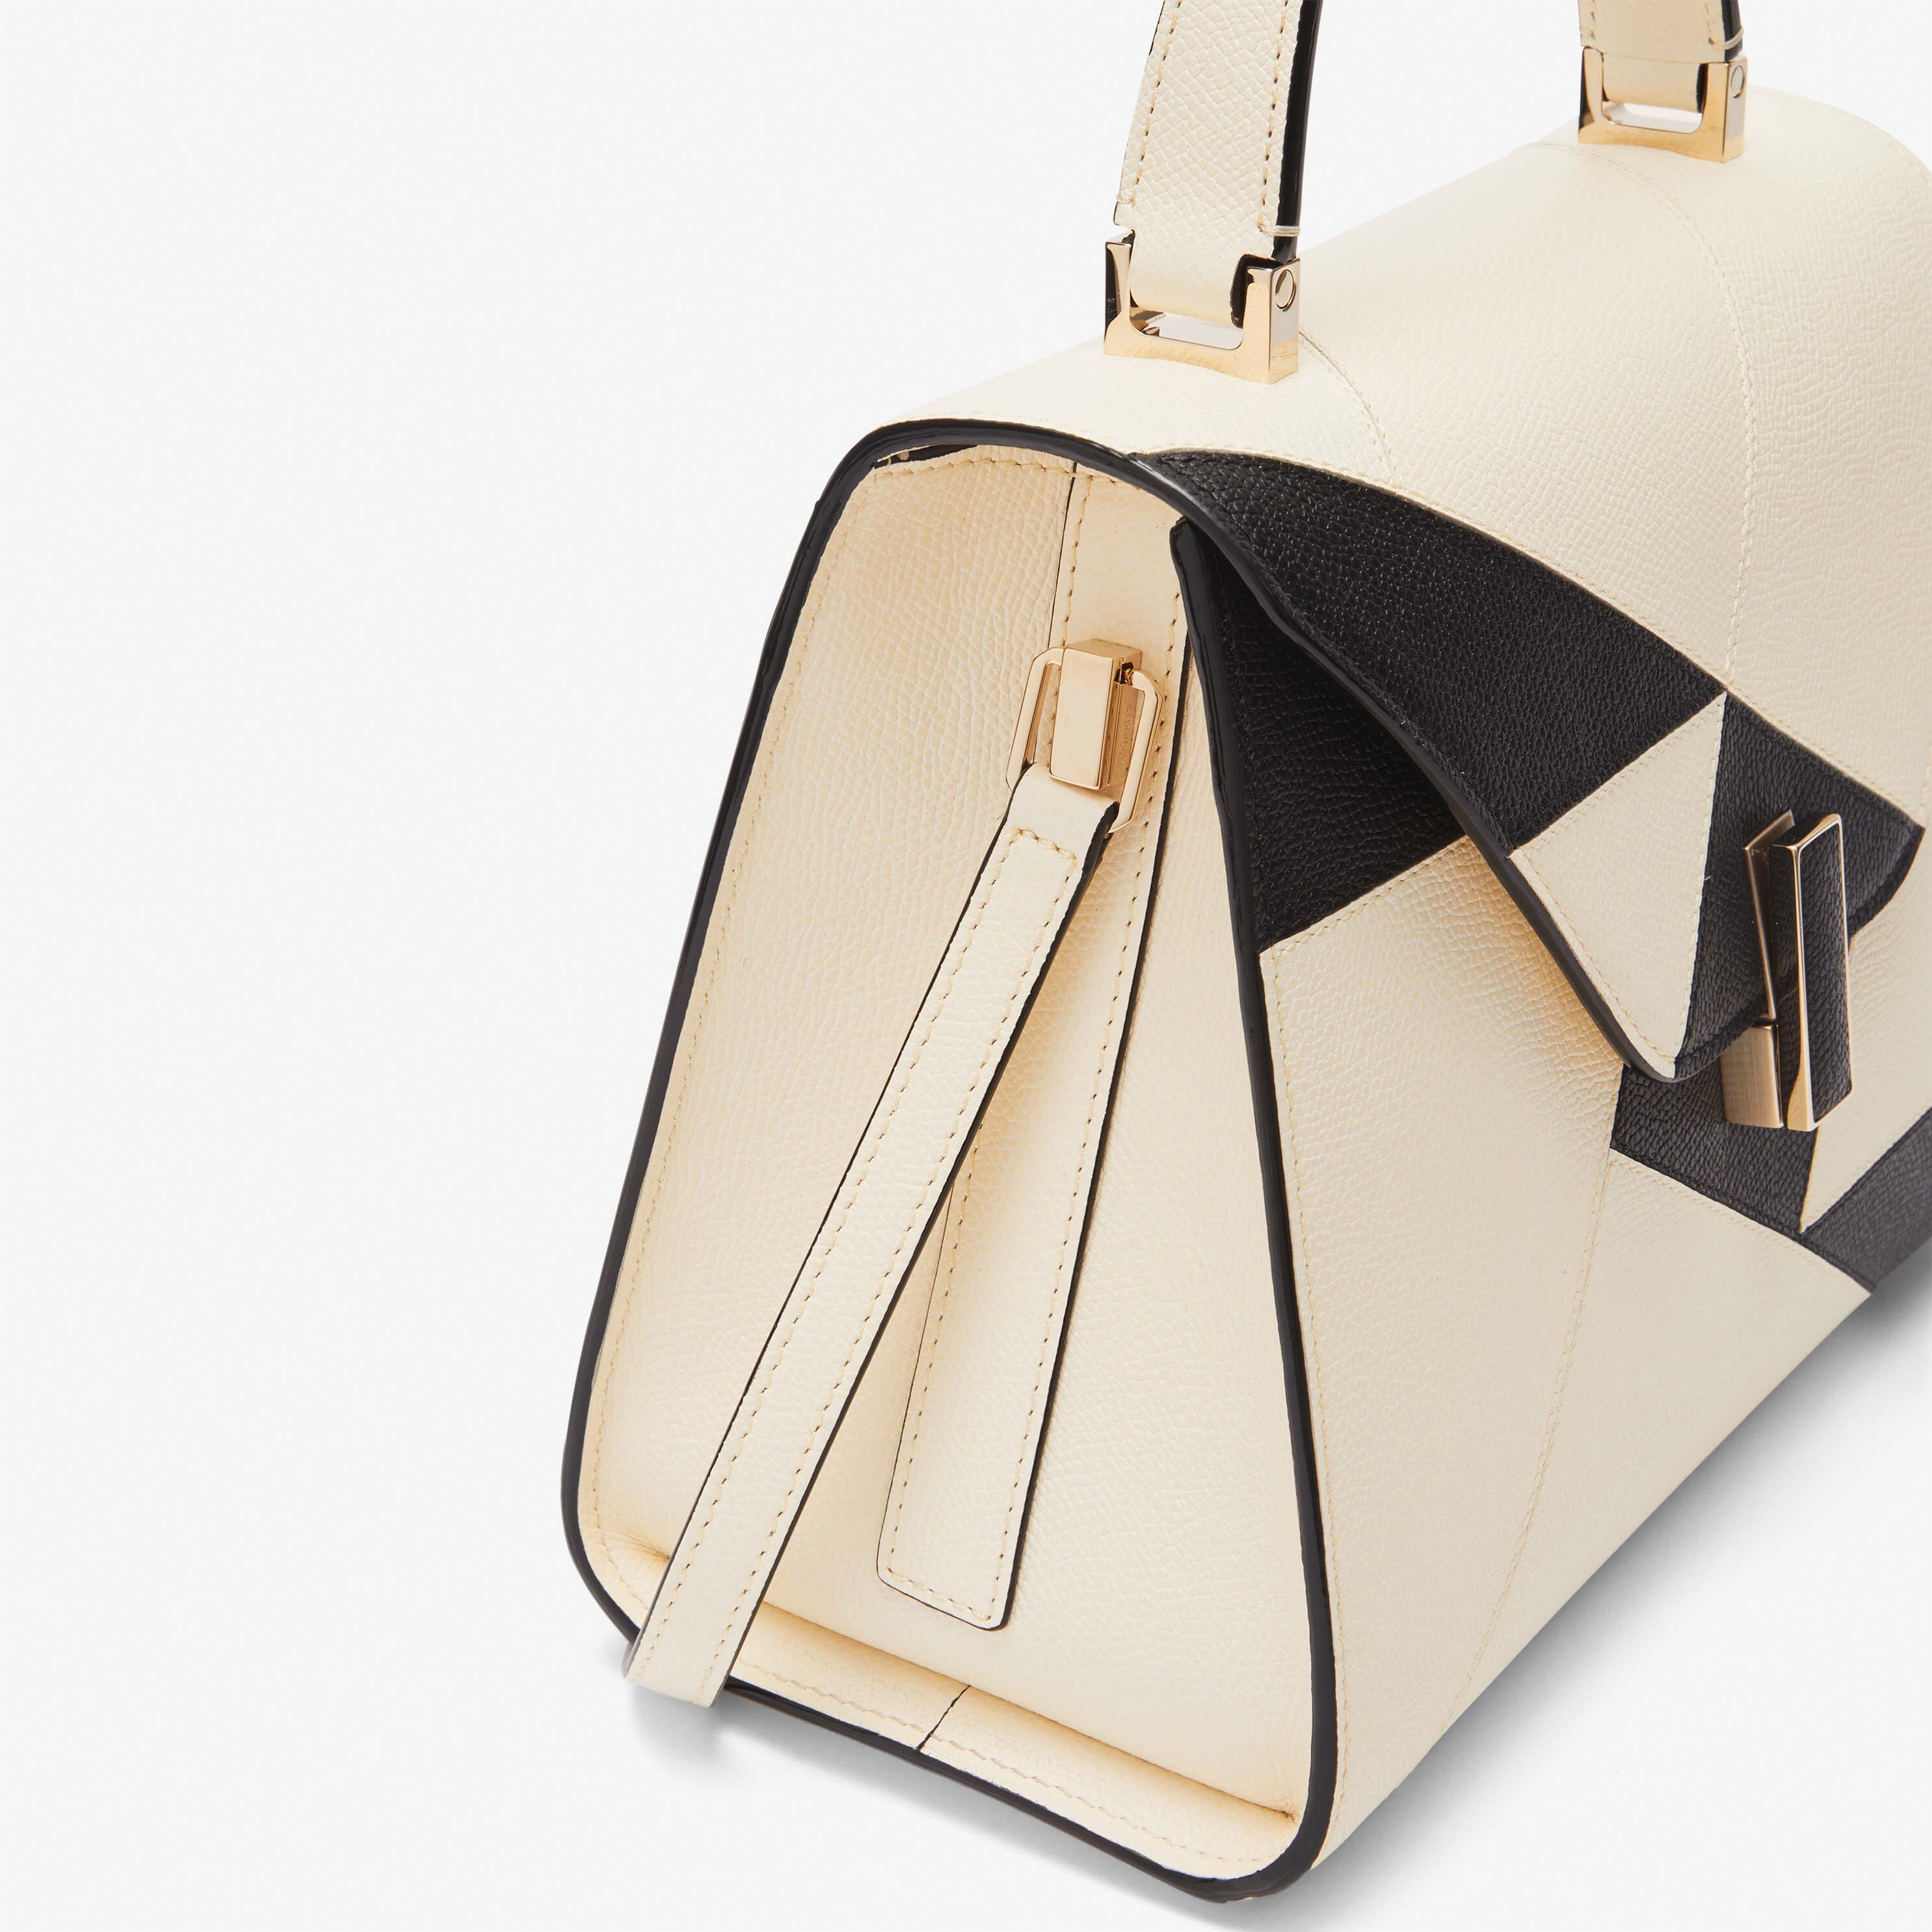 Iside Carousel Top handle Medium bag - Pergamena White/Black - Vitello VS-Intarsio Rombo - Valextra - 5